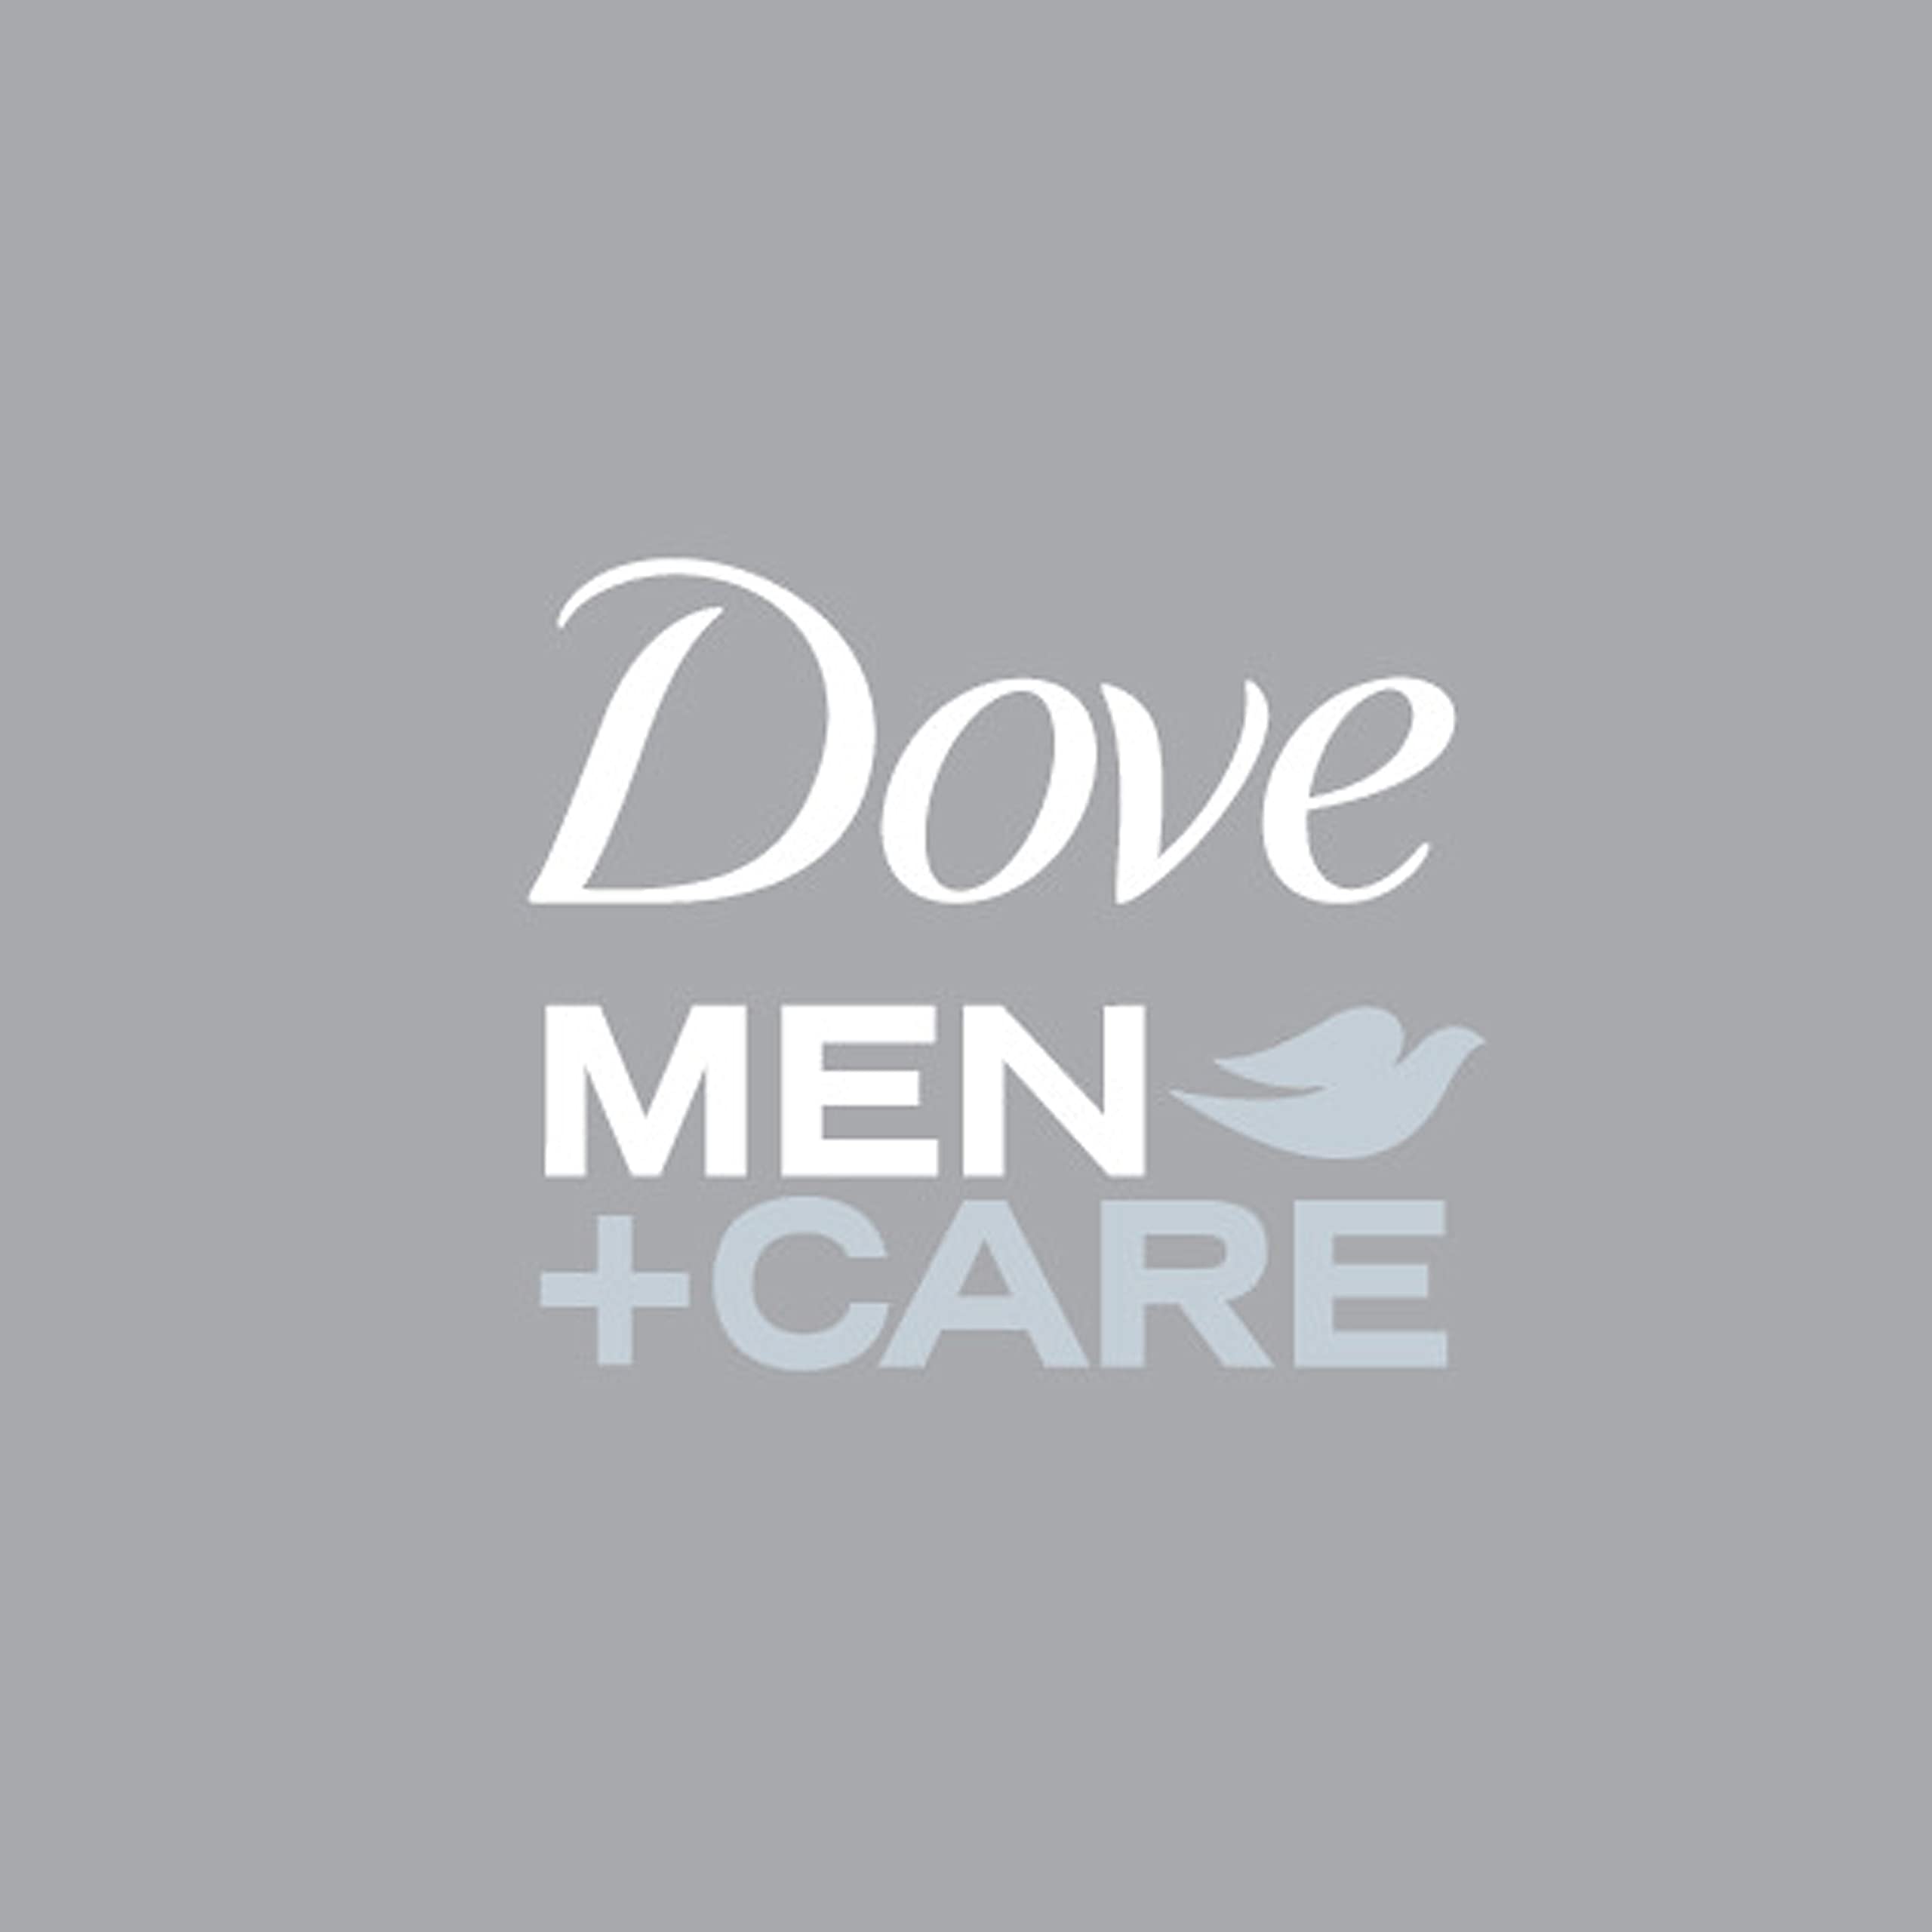 Dove Men+Care Antiperspirant Deodorant Sea Salt and Wild Lavender Natural Inspired Deodorant for men 2.6 oz 4 Count